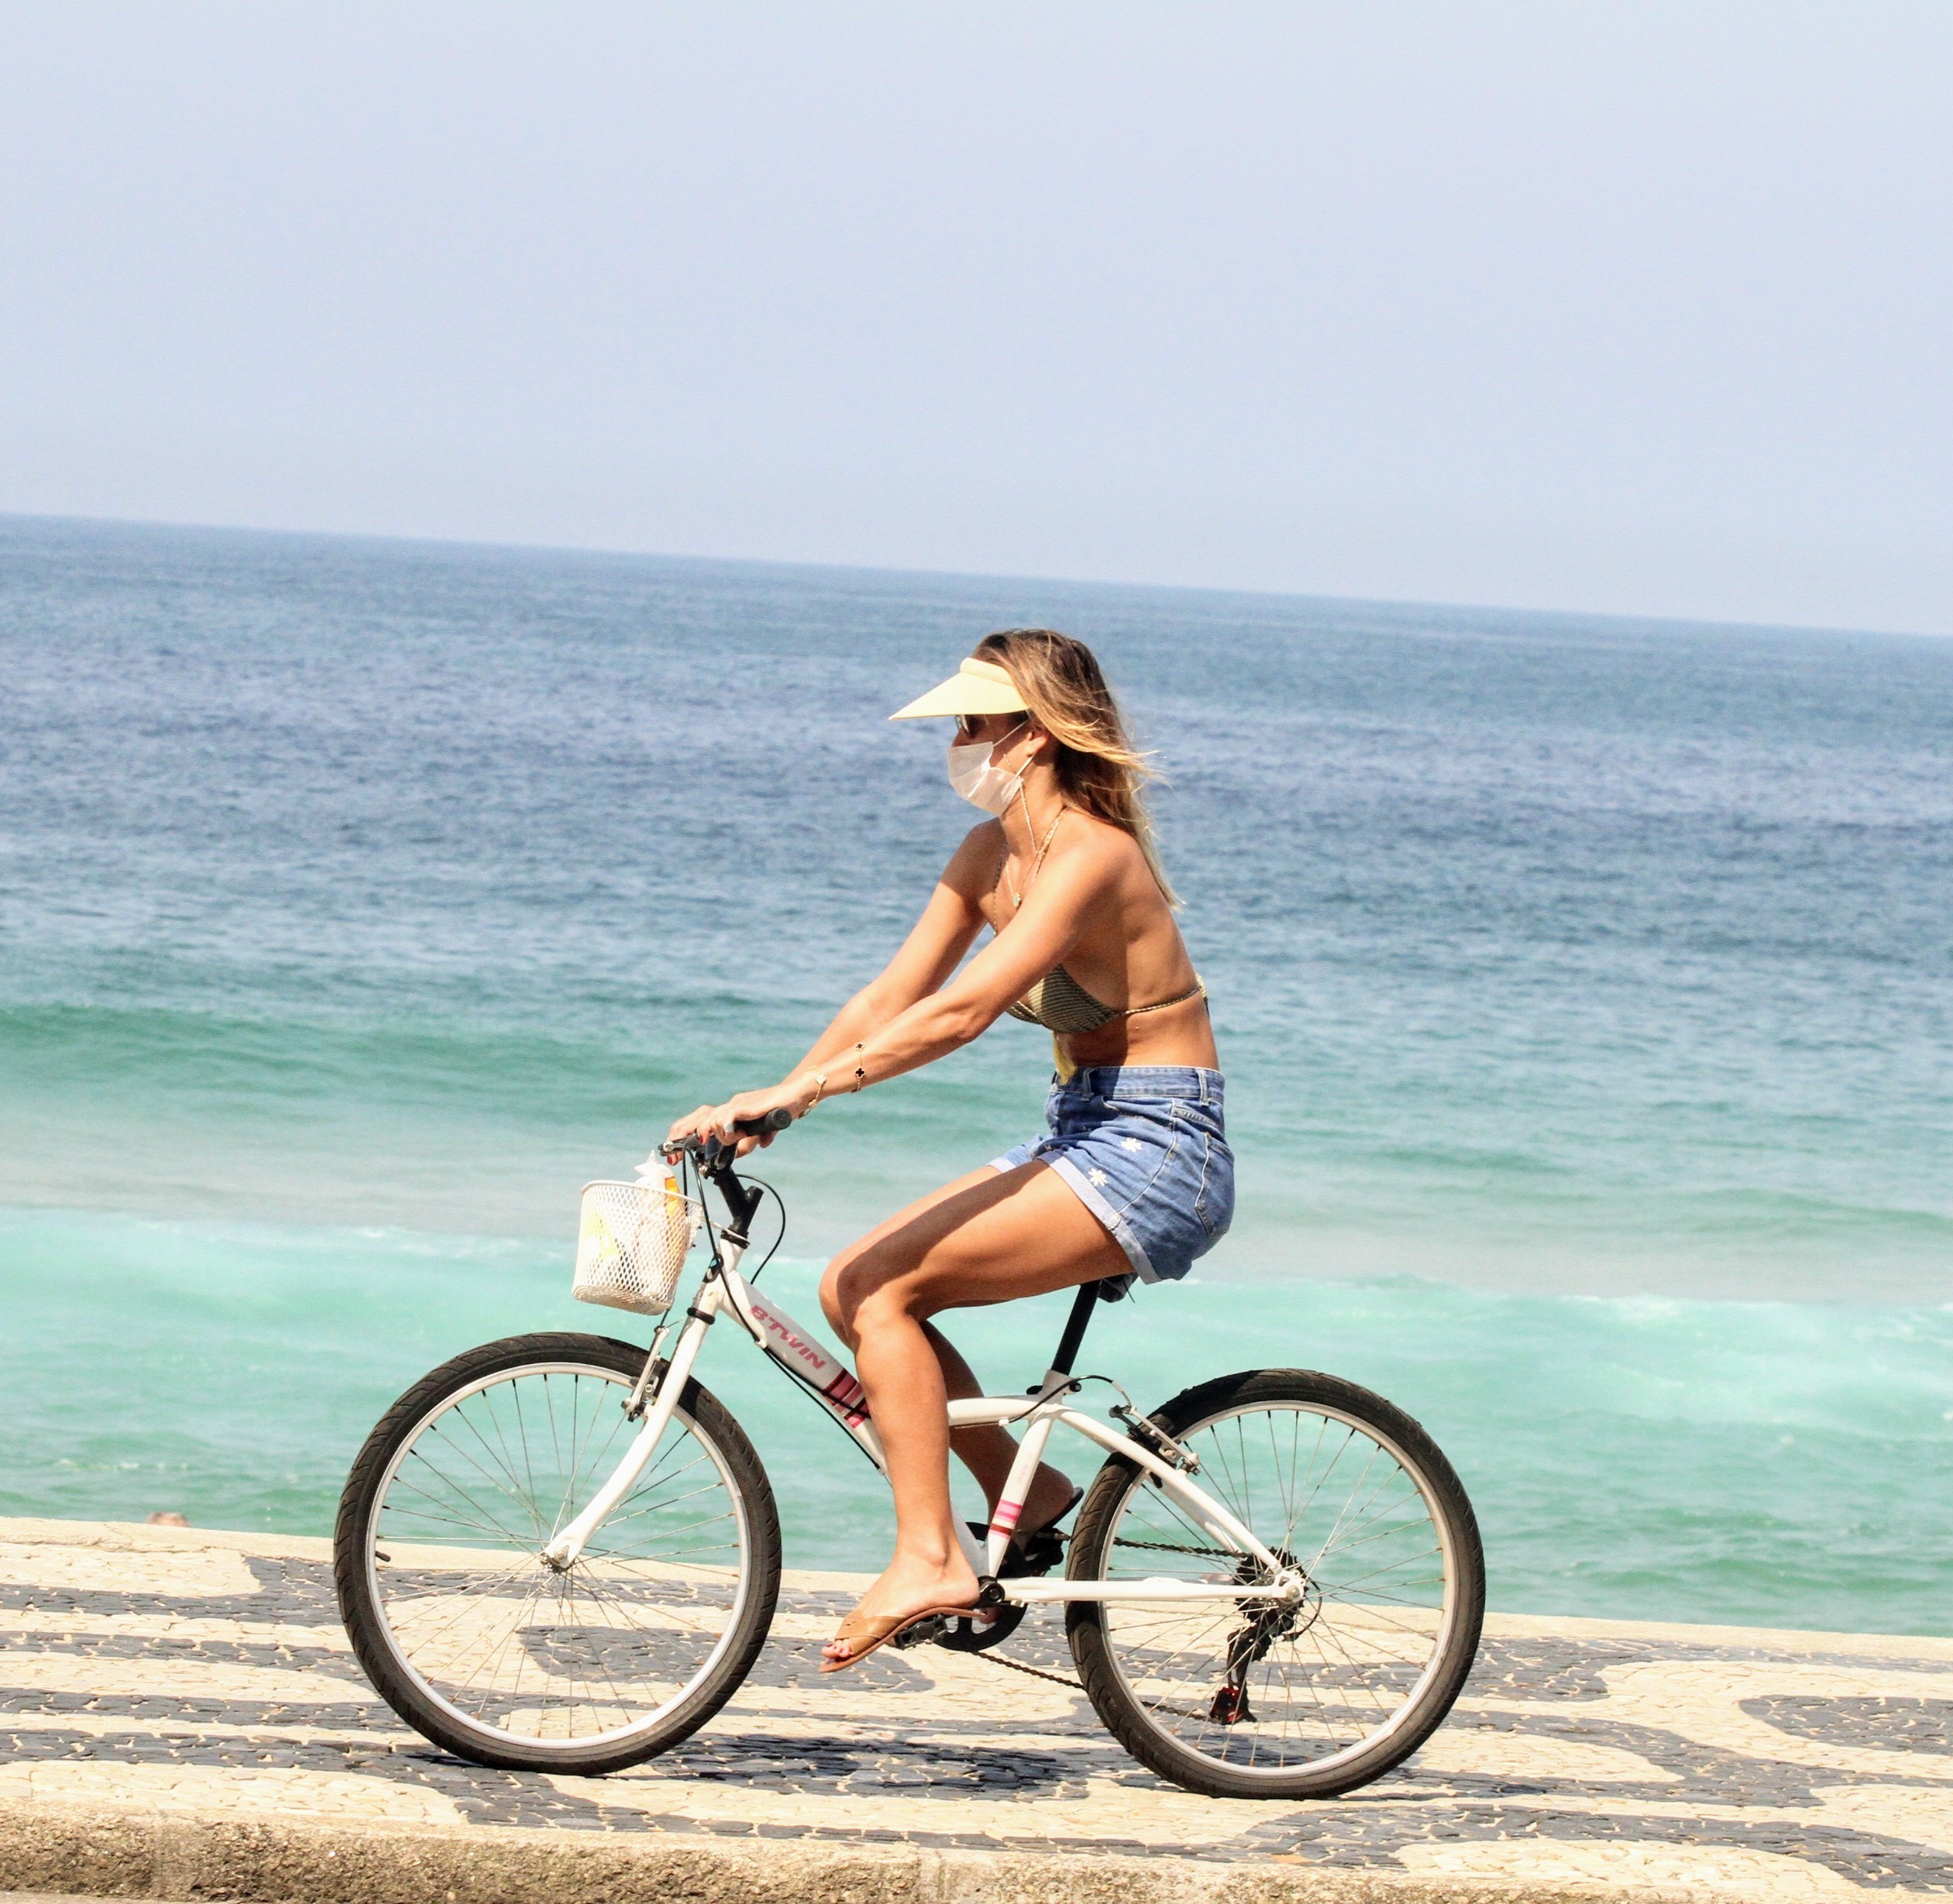 Luize Valdetaro passeou de bike com a filha na orla da praia (Foto: Daniel Delmiro/AgNews)